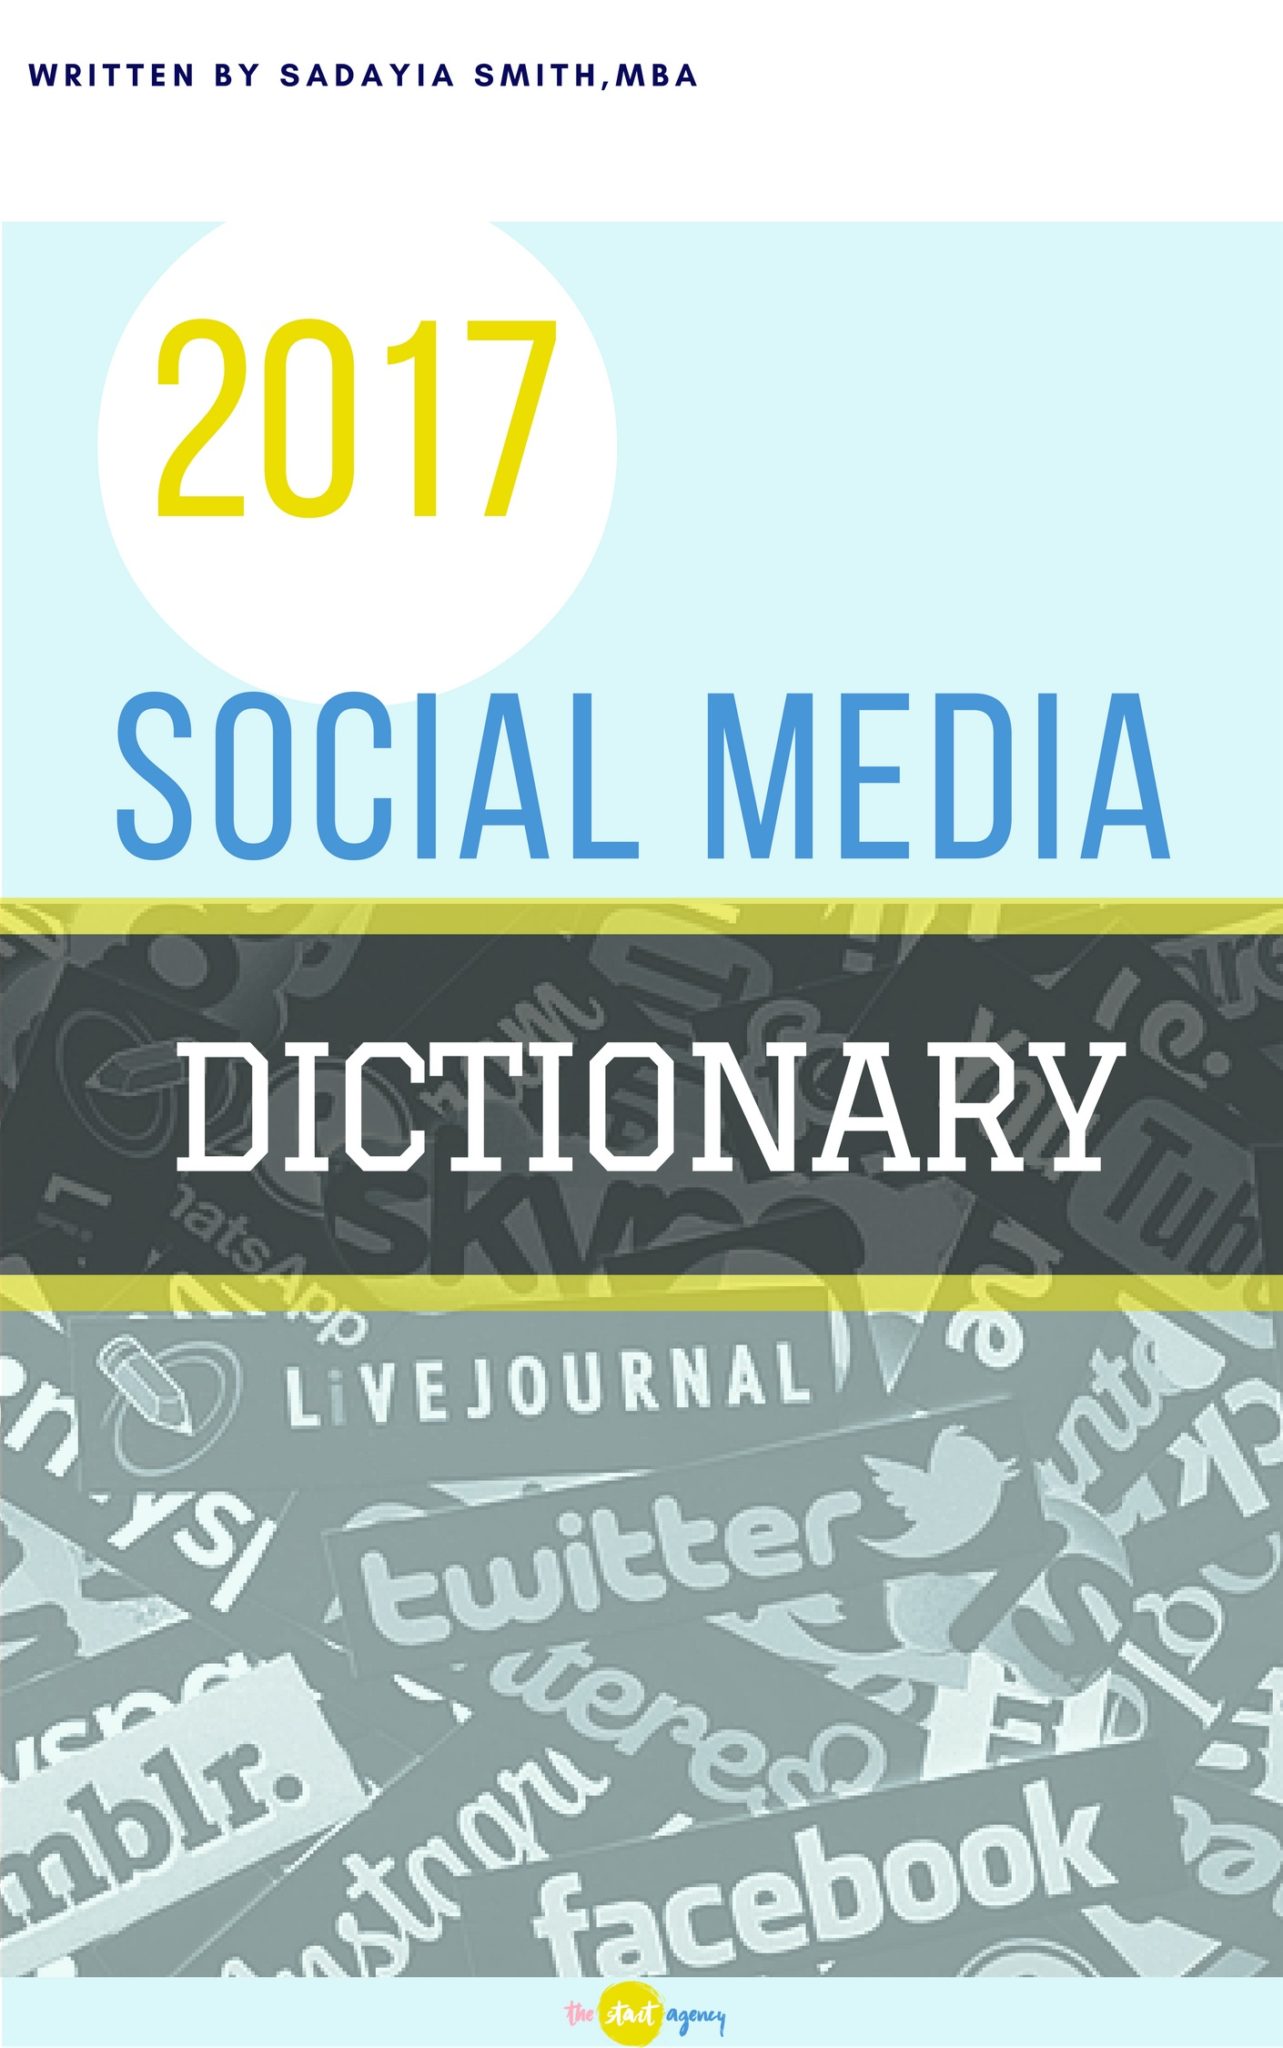 FREE: Starting Bossy: 2017 Social Media Dictionary by Sadayia Smith